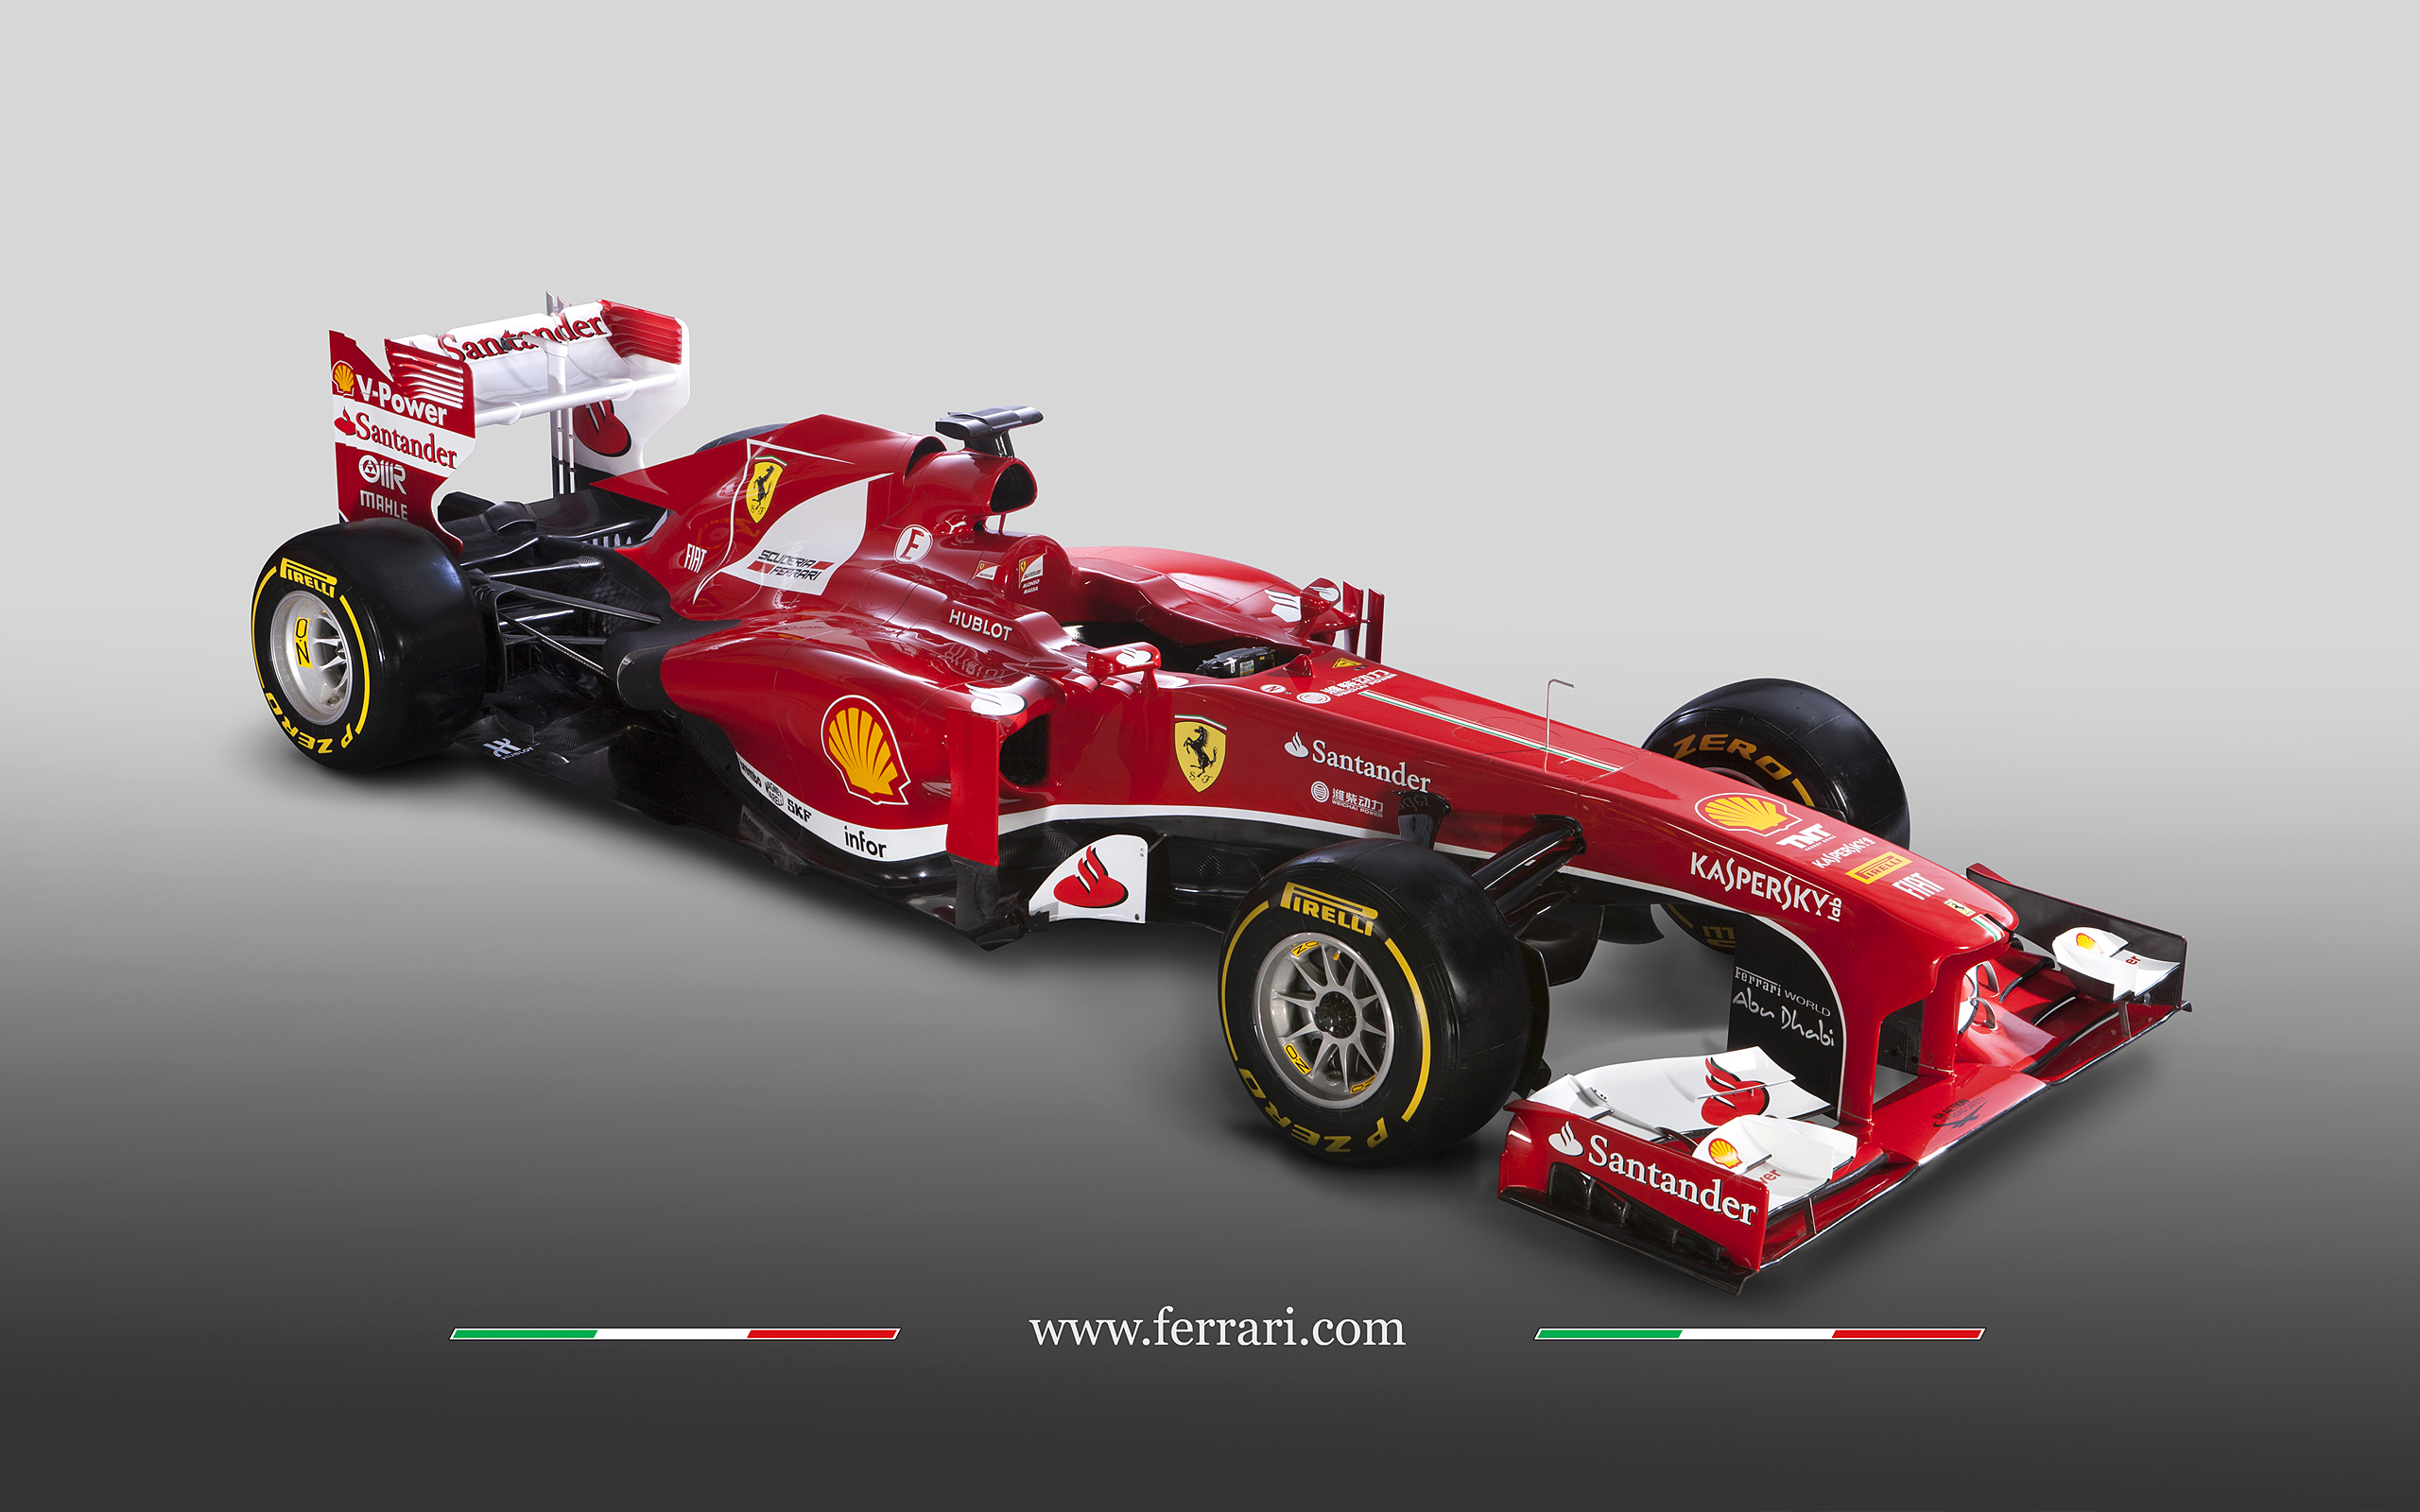  2013 Ferrari F138 Wallpaper.